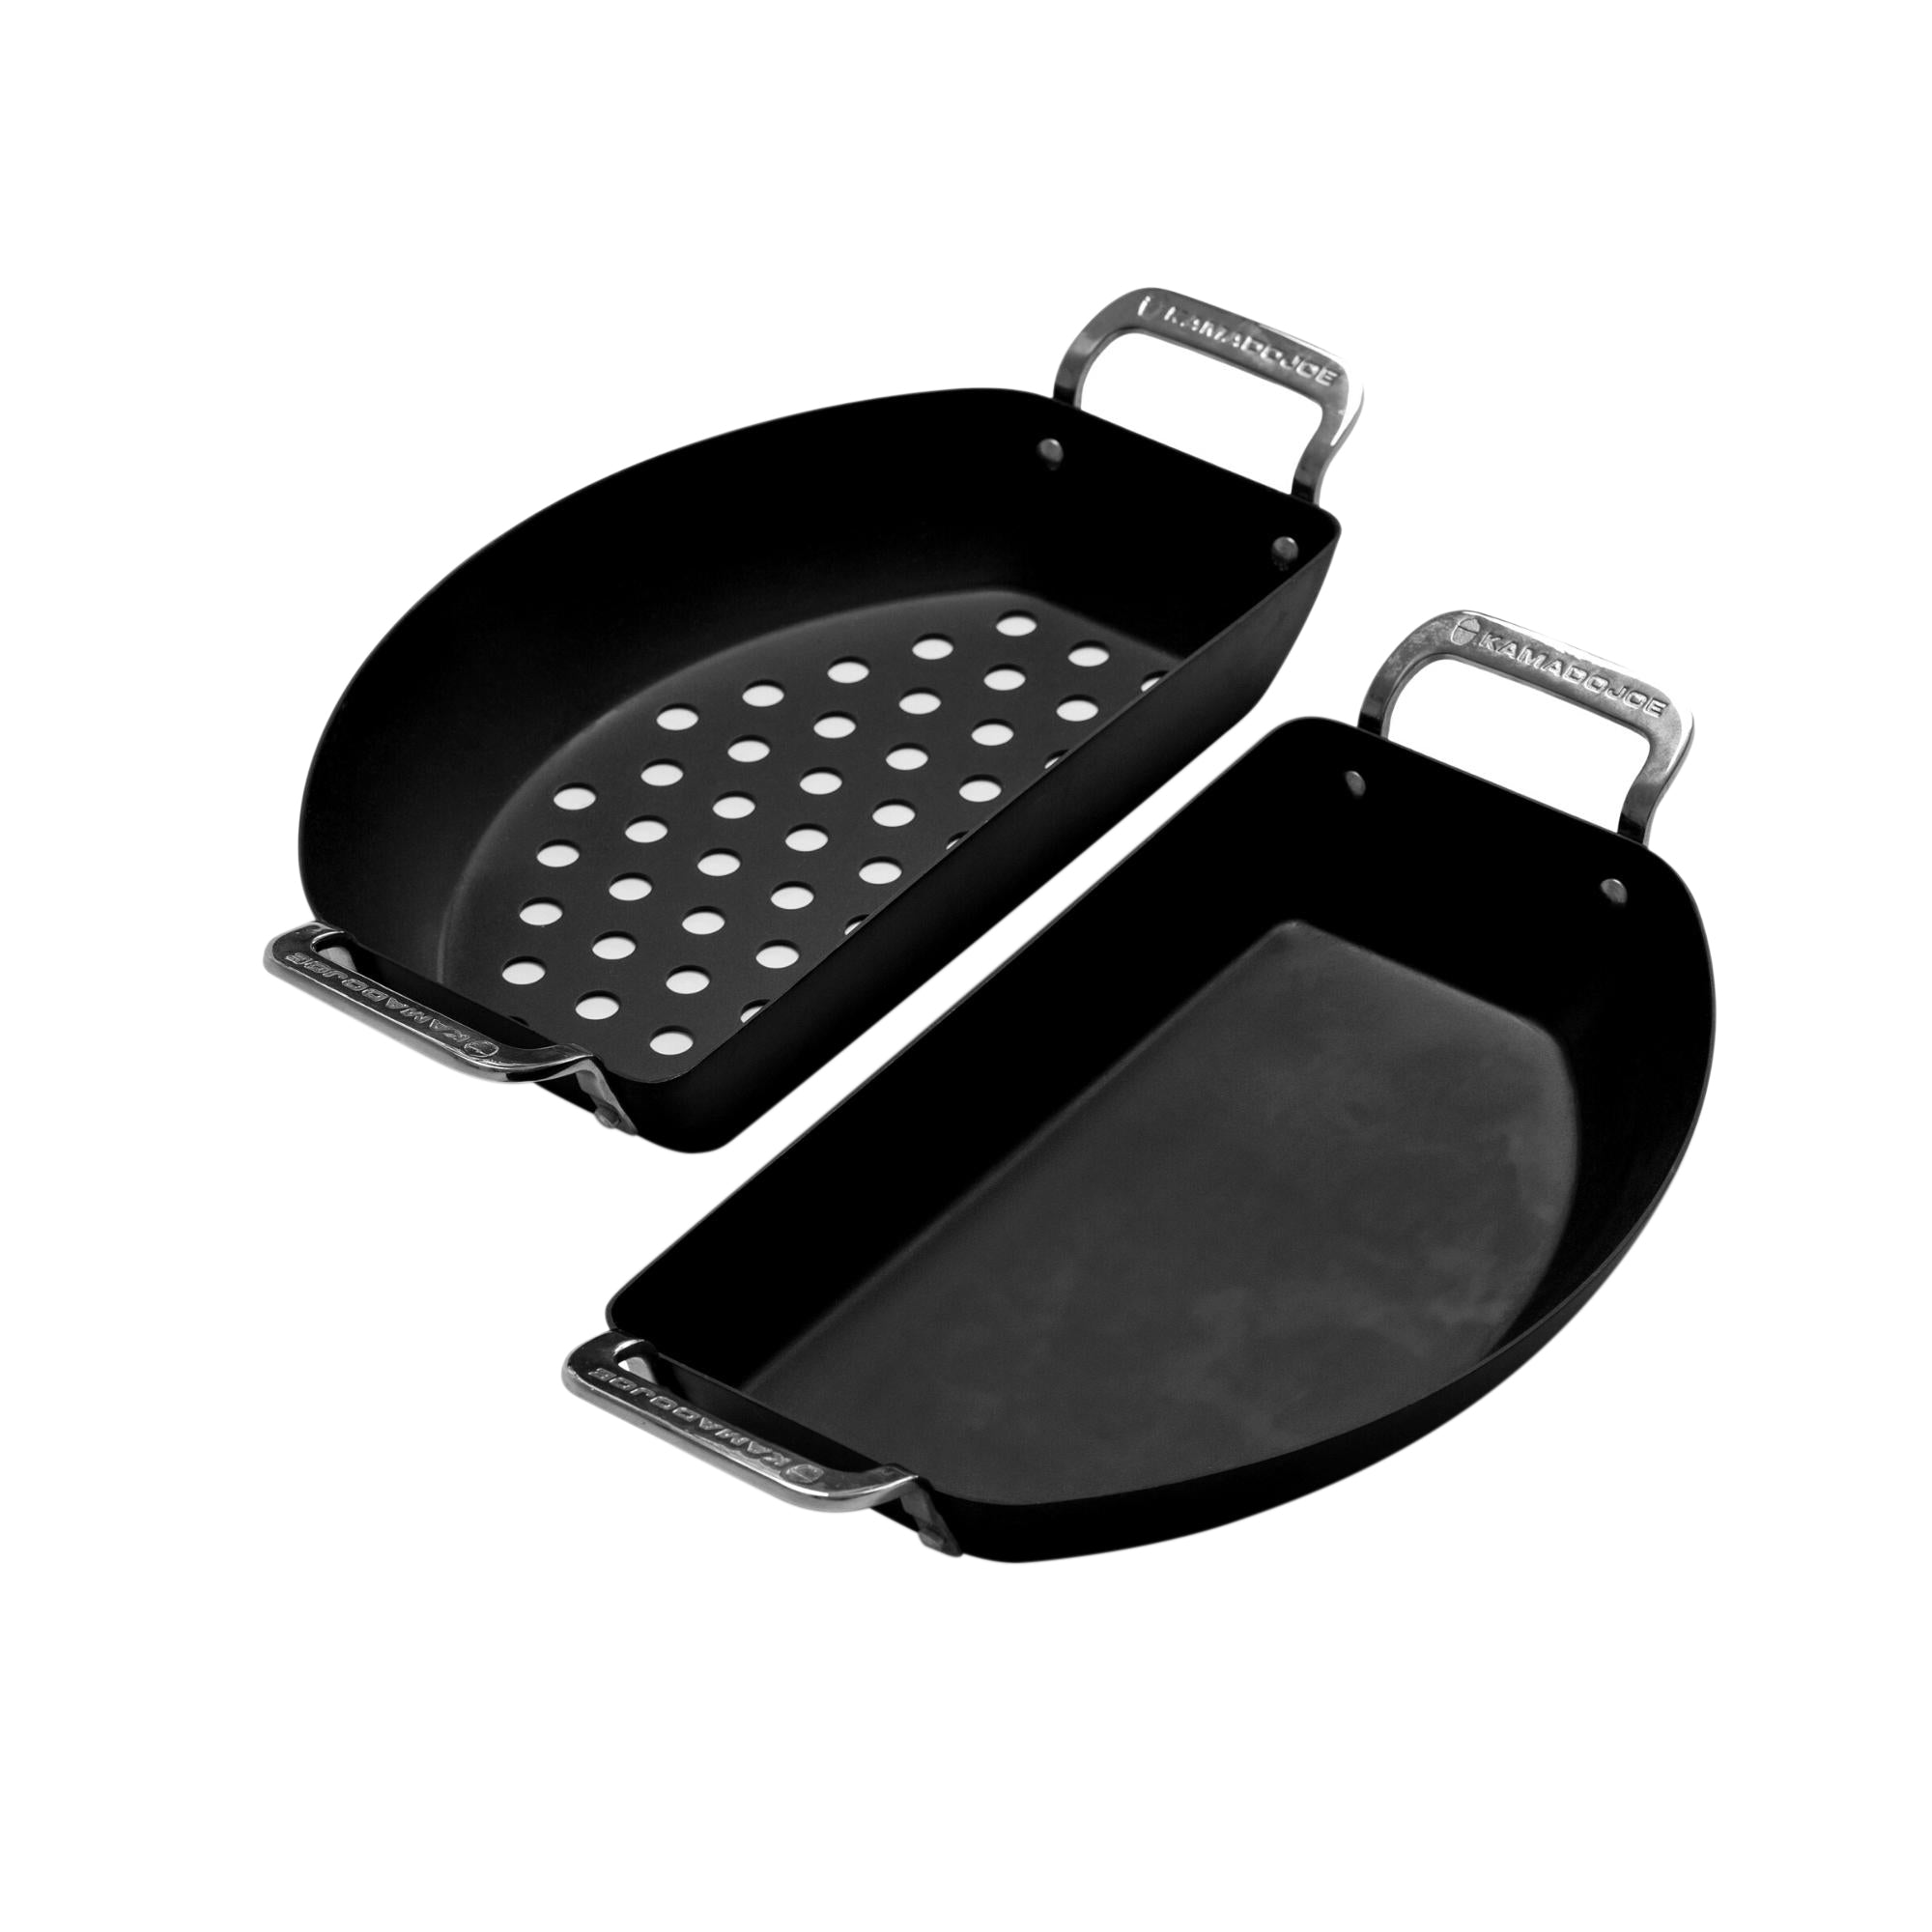 GBS 7 Piece Carbon Steel Cookware Set 